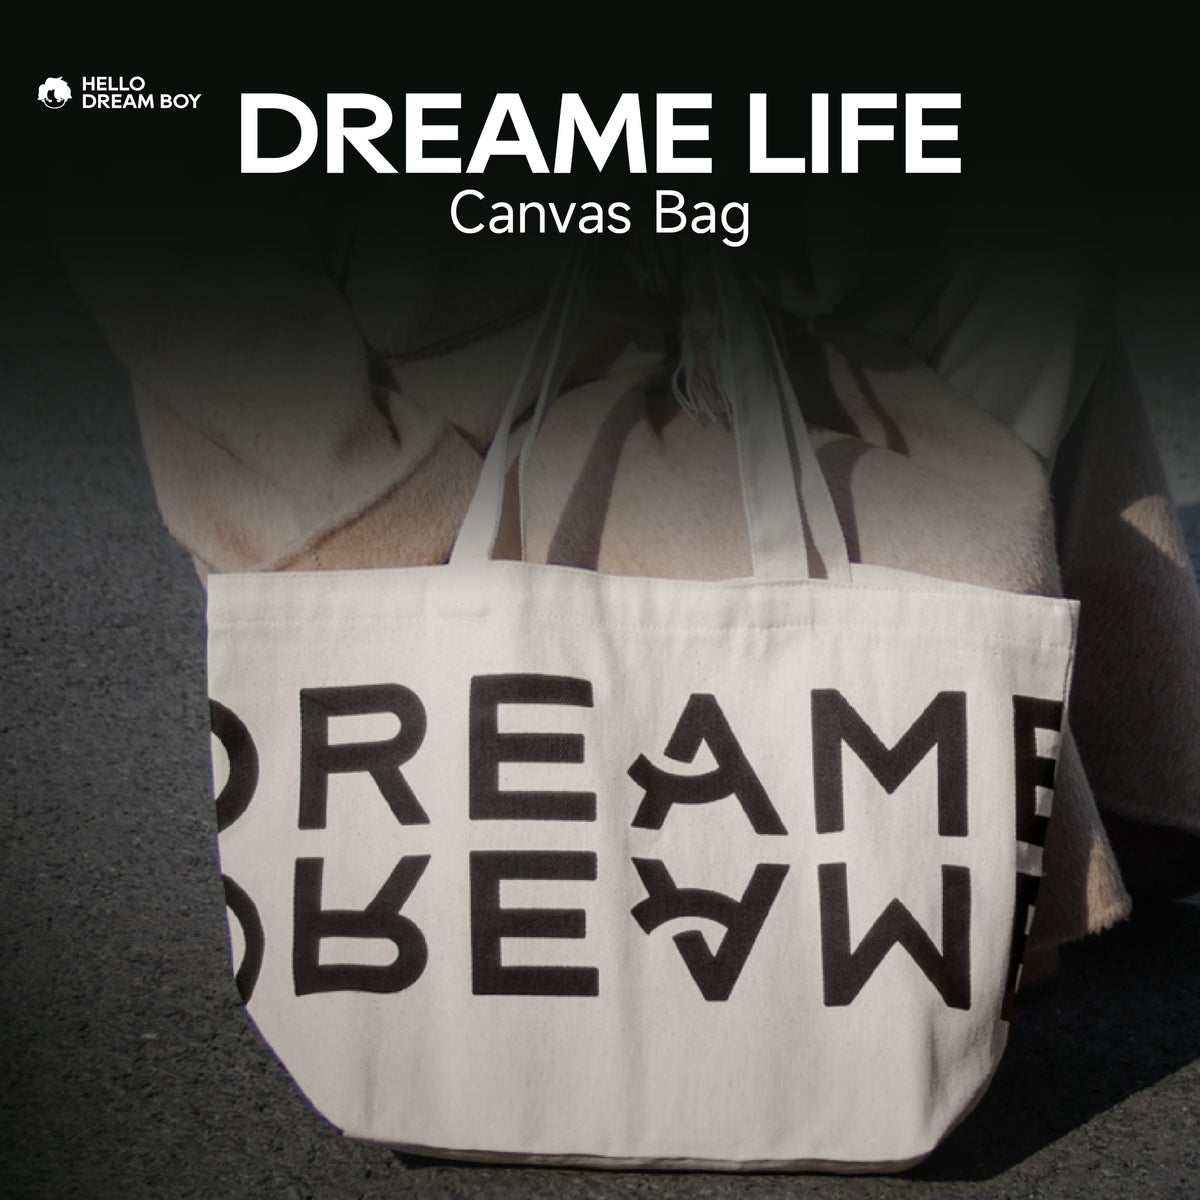 DREAME LIFE Canvas Bag | Tote Bag | Cotton Material